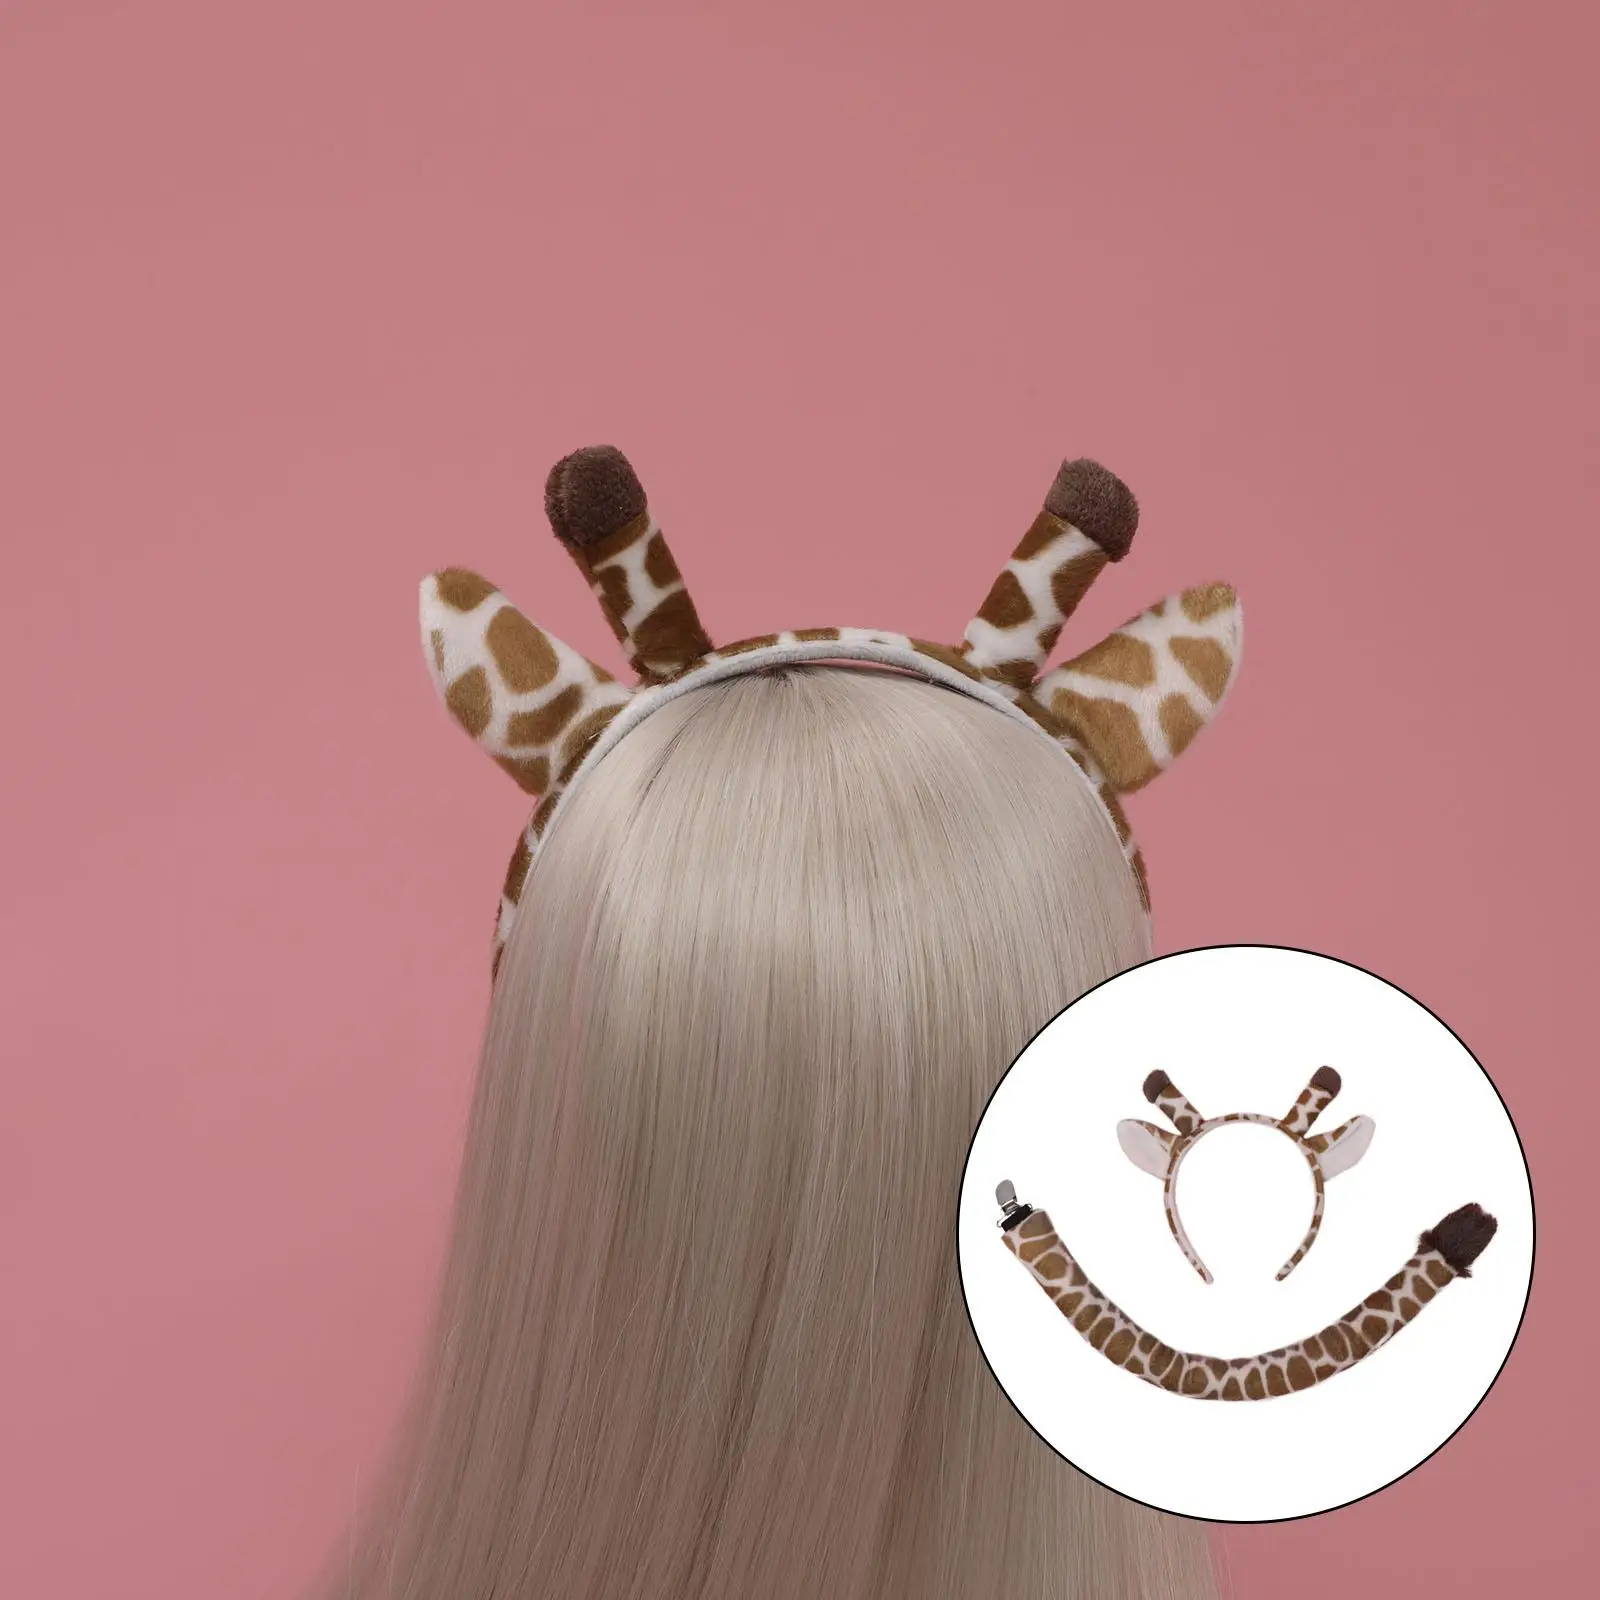 Cute Giraffe Tail Ears Set Headband Hand-Made for Dress Up Decoration